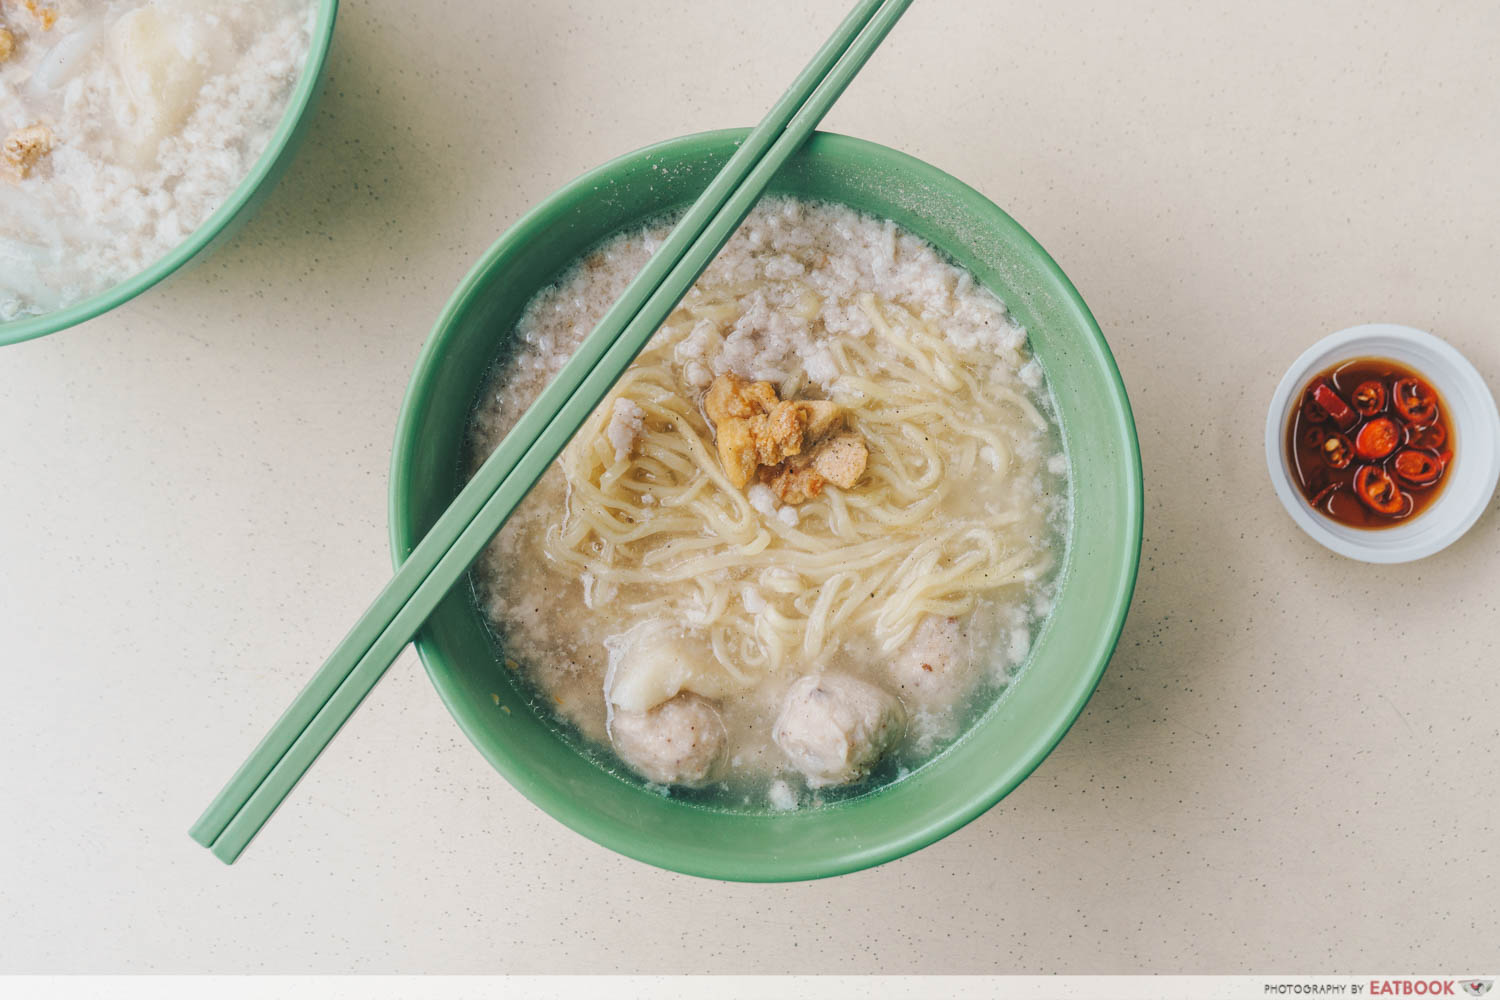 Soon Heng Pork Noodles - Mee Kia bowl